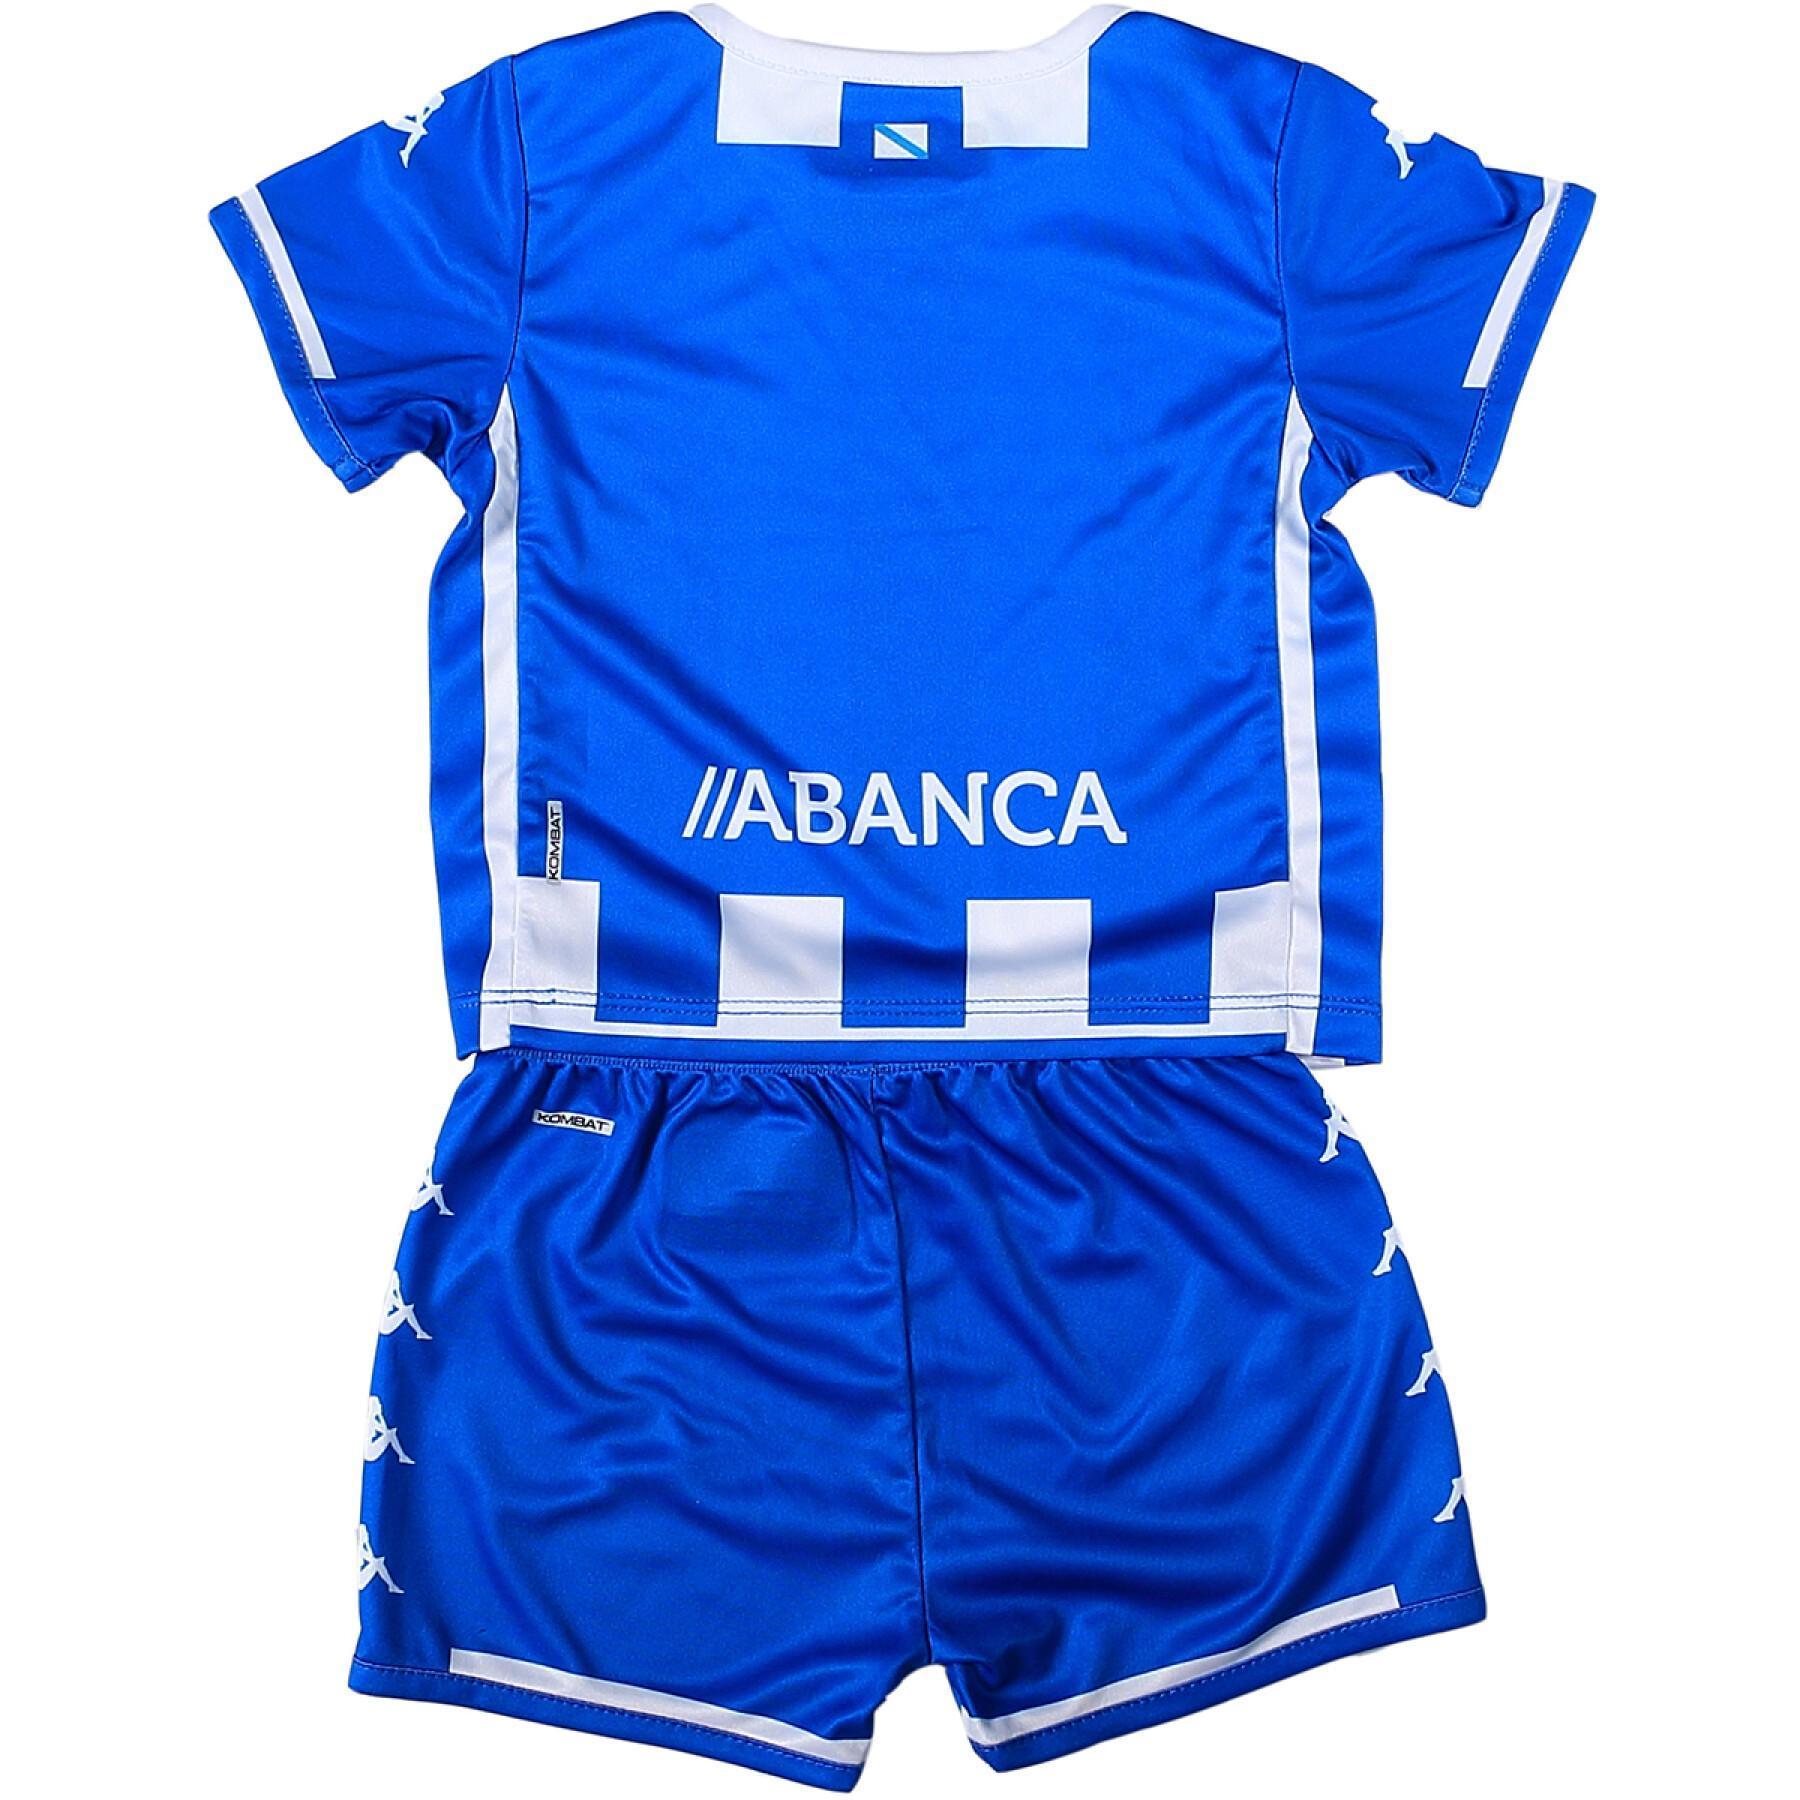 Baby home kit Deportivo La Corogne 2021/22